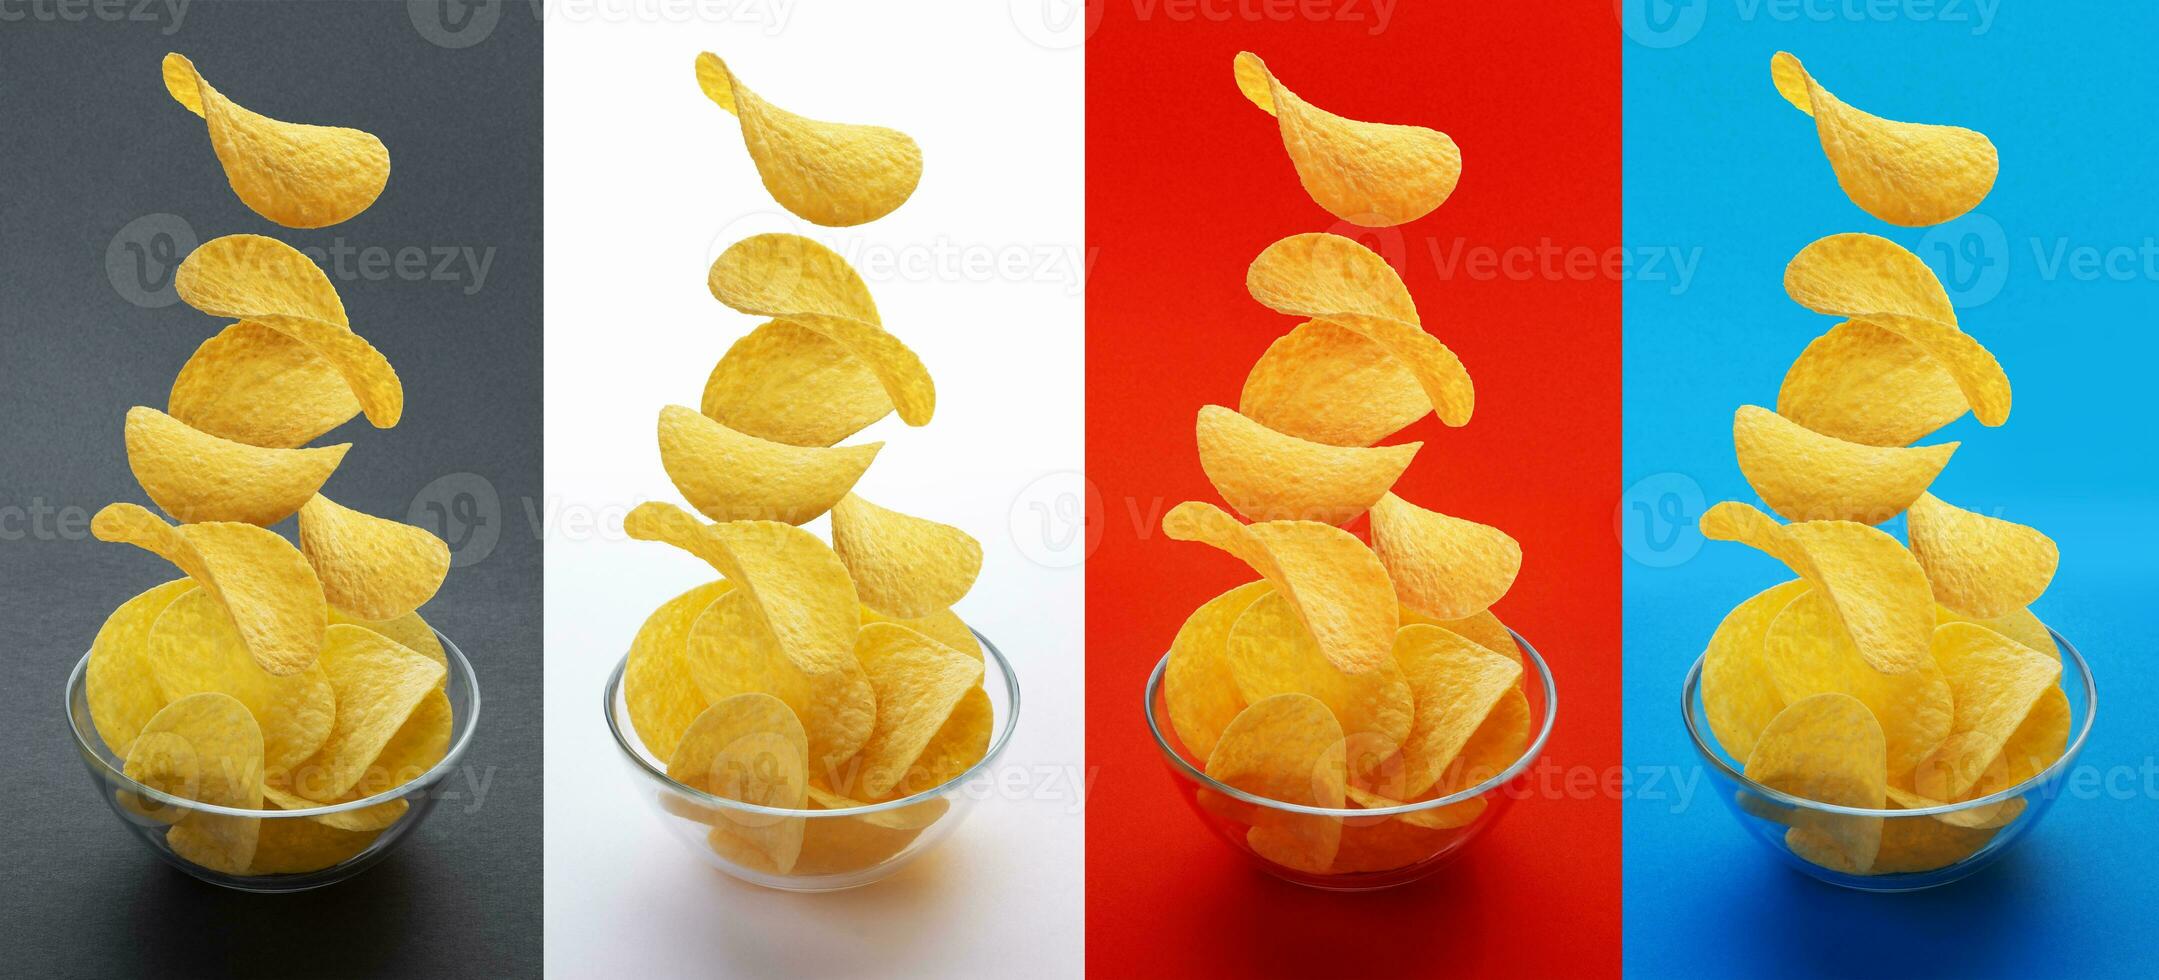 potatis pommes frites faller in i glas skål isolerat på vit bakgrund, flygande potatis chips foto